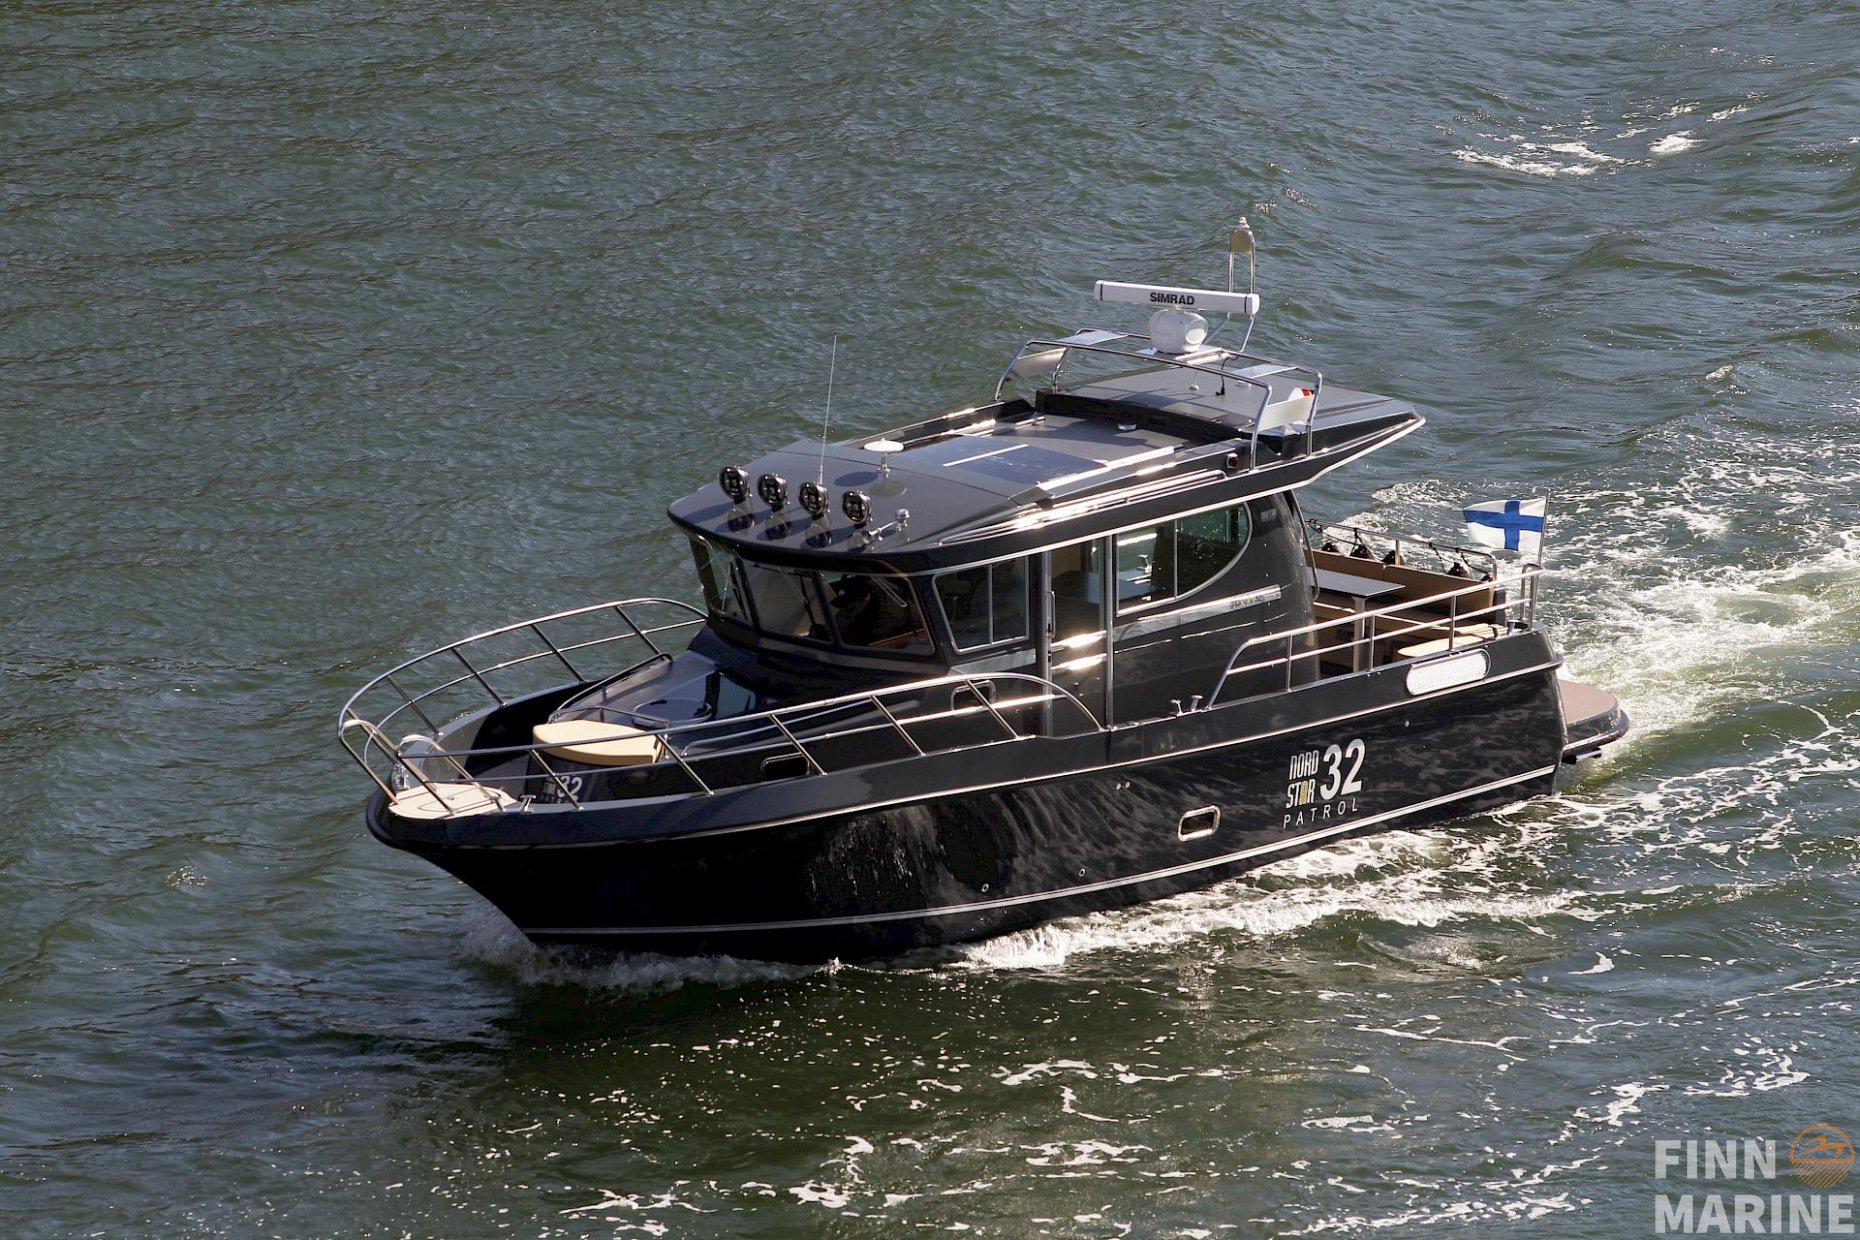 Nord star 28 outboard | катер для морской рыбалки | катер 2 каюты.